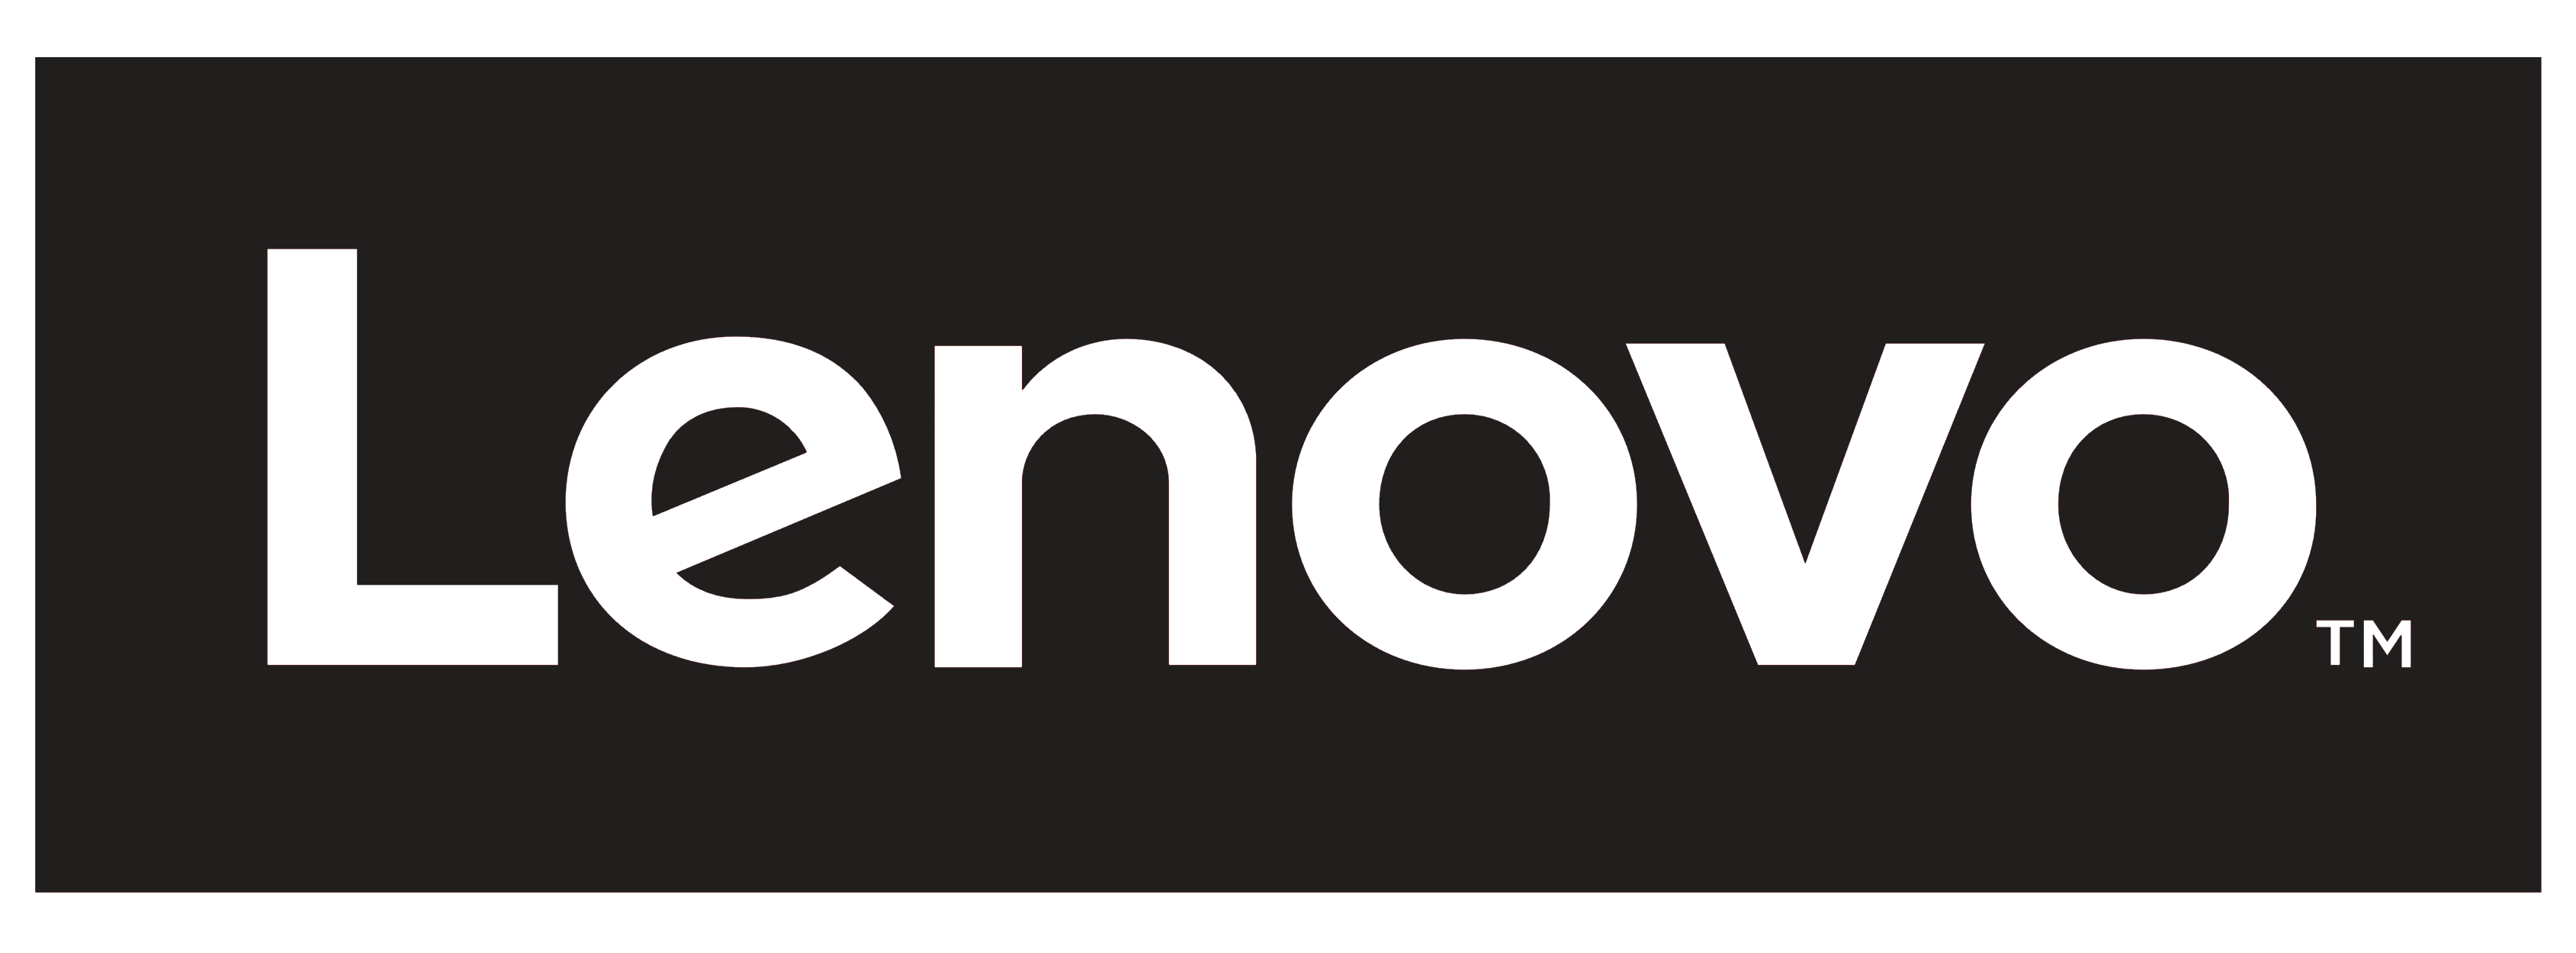 Lenovo New Logo And Rebrand -